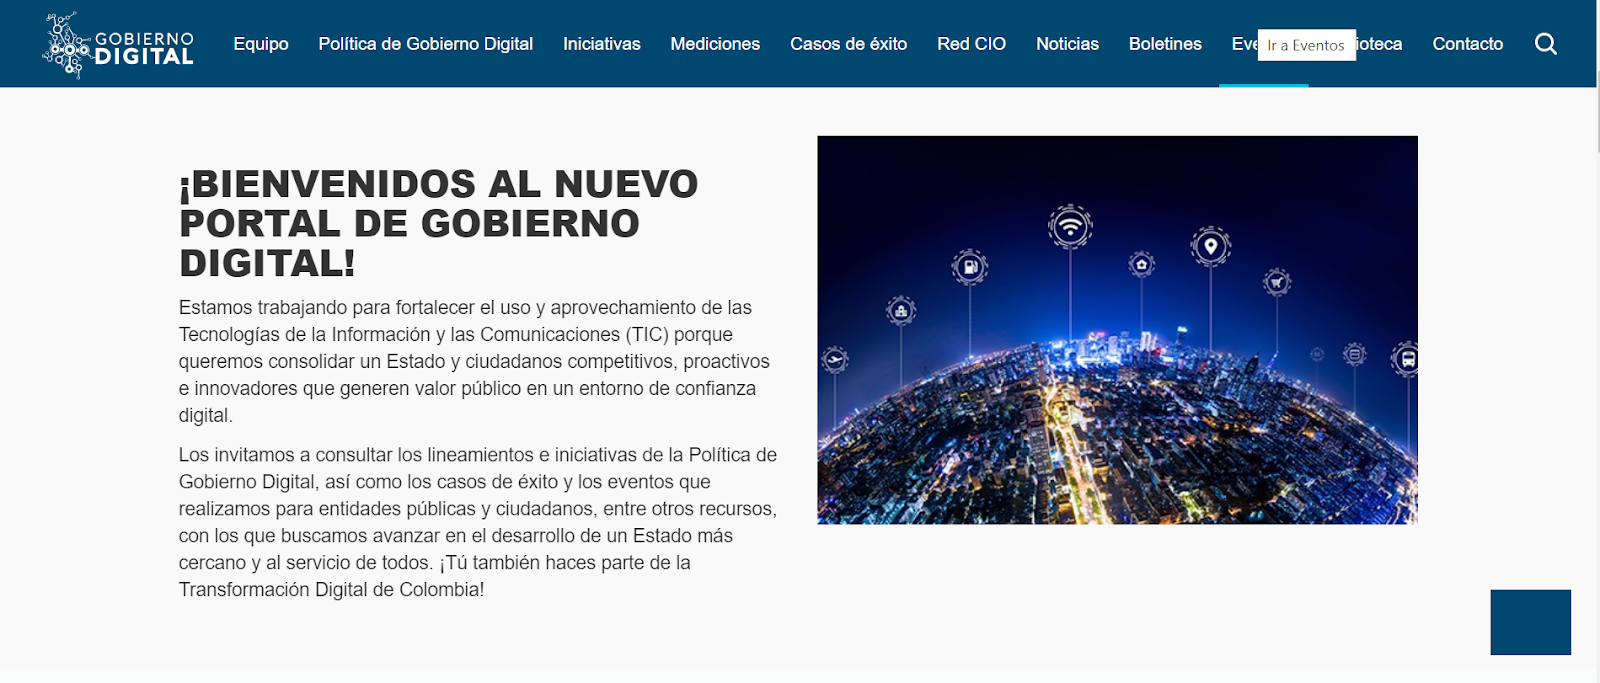 Avance digital Gobierno Colombiano